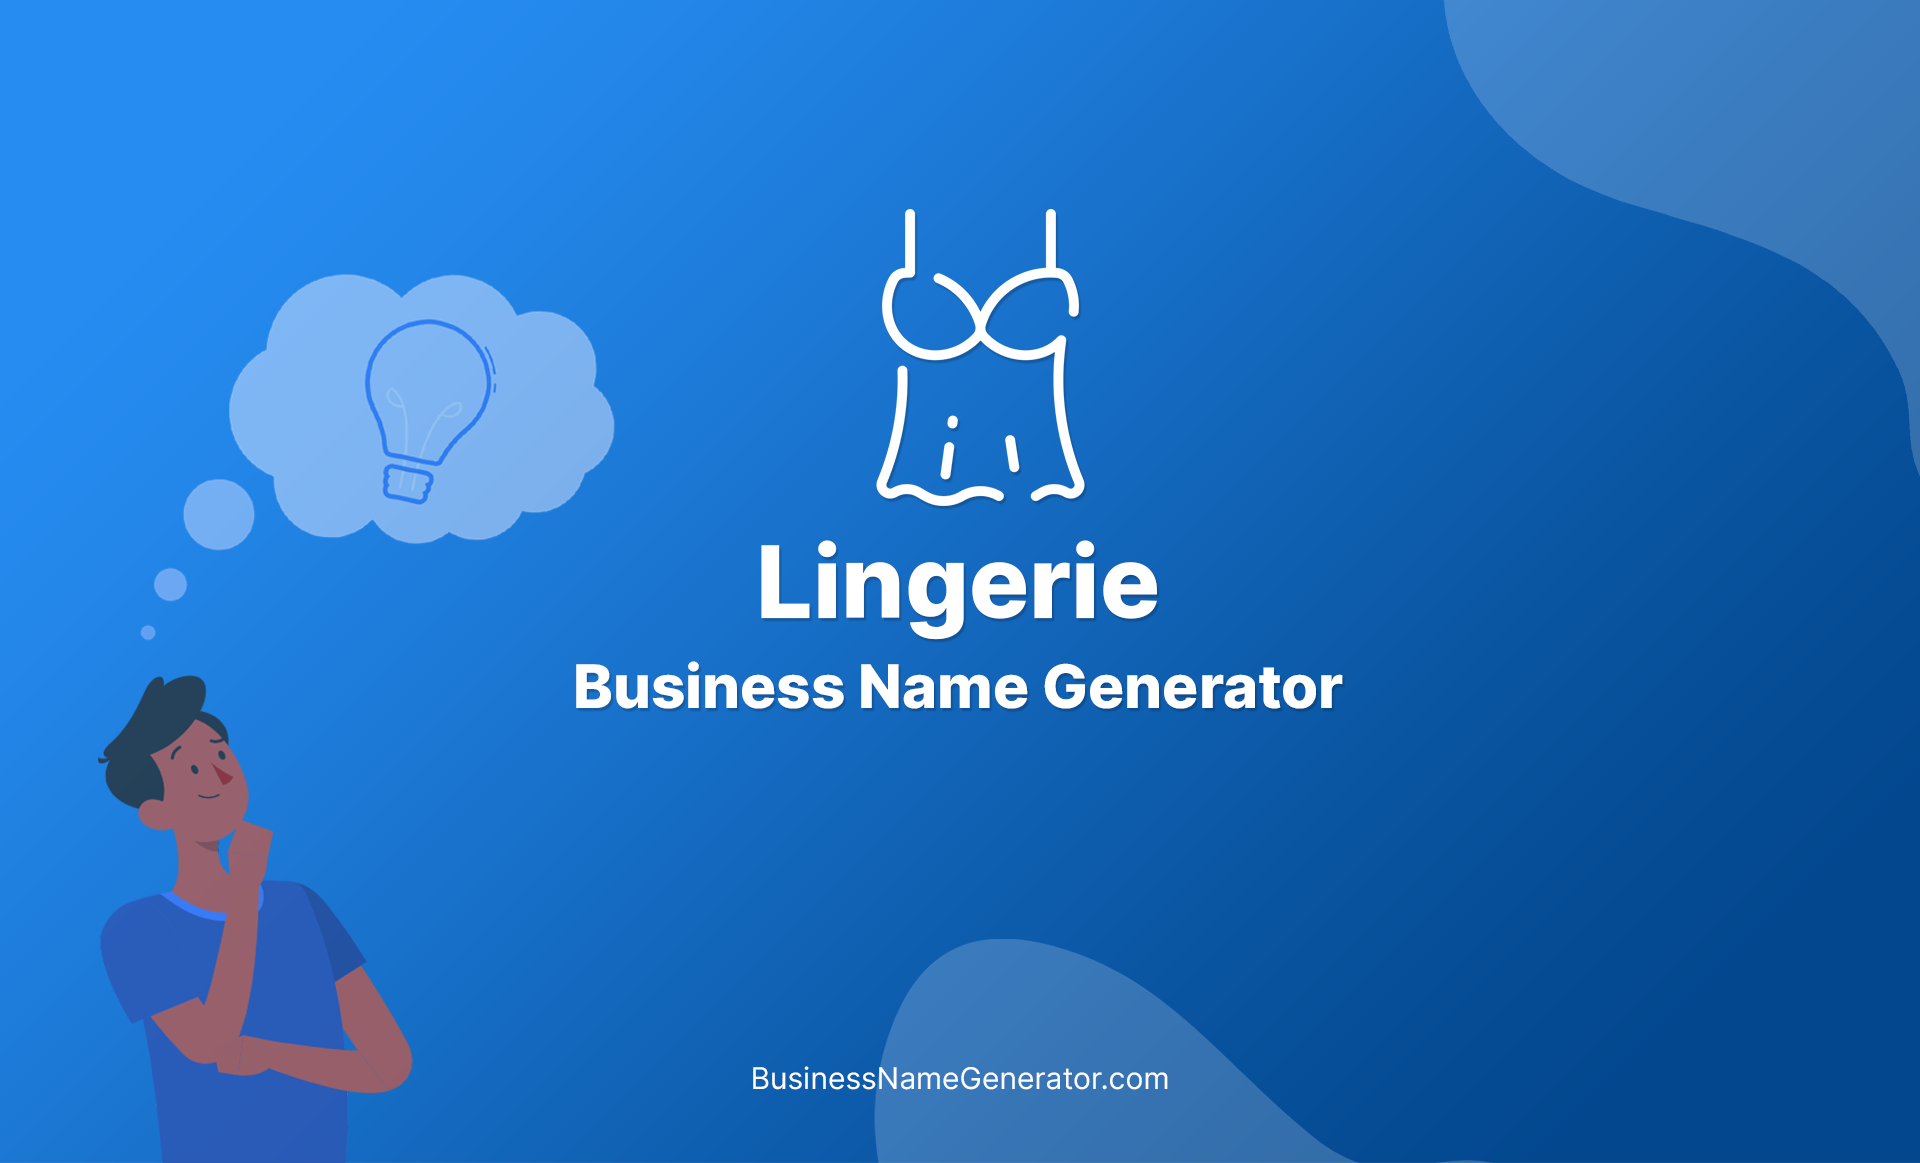 Lingerie Business Name Generator